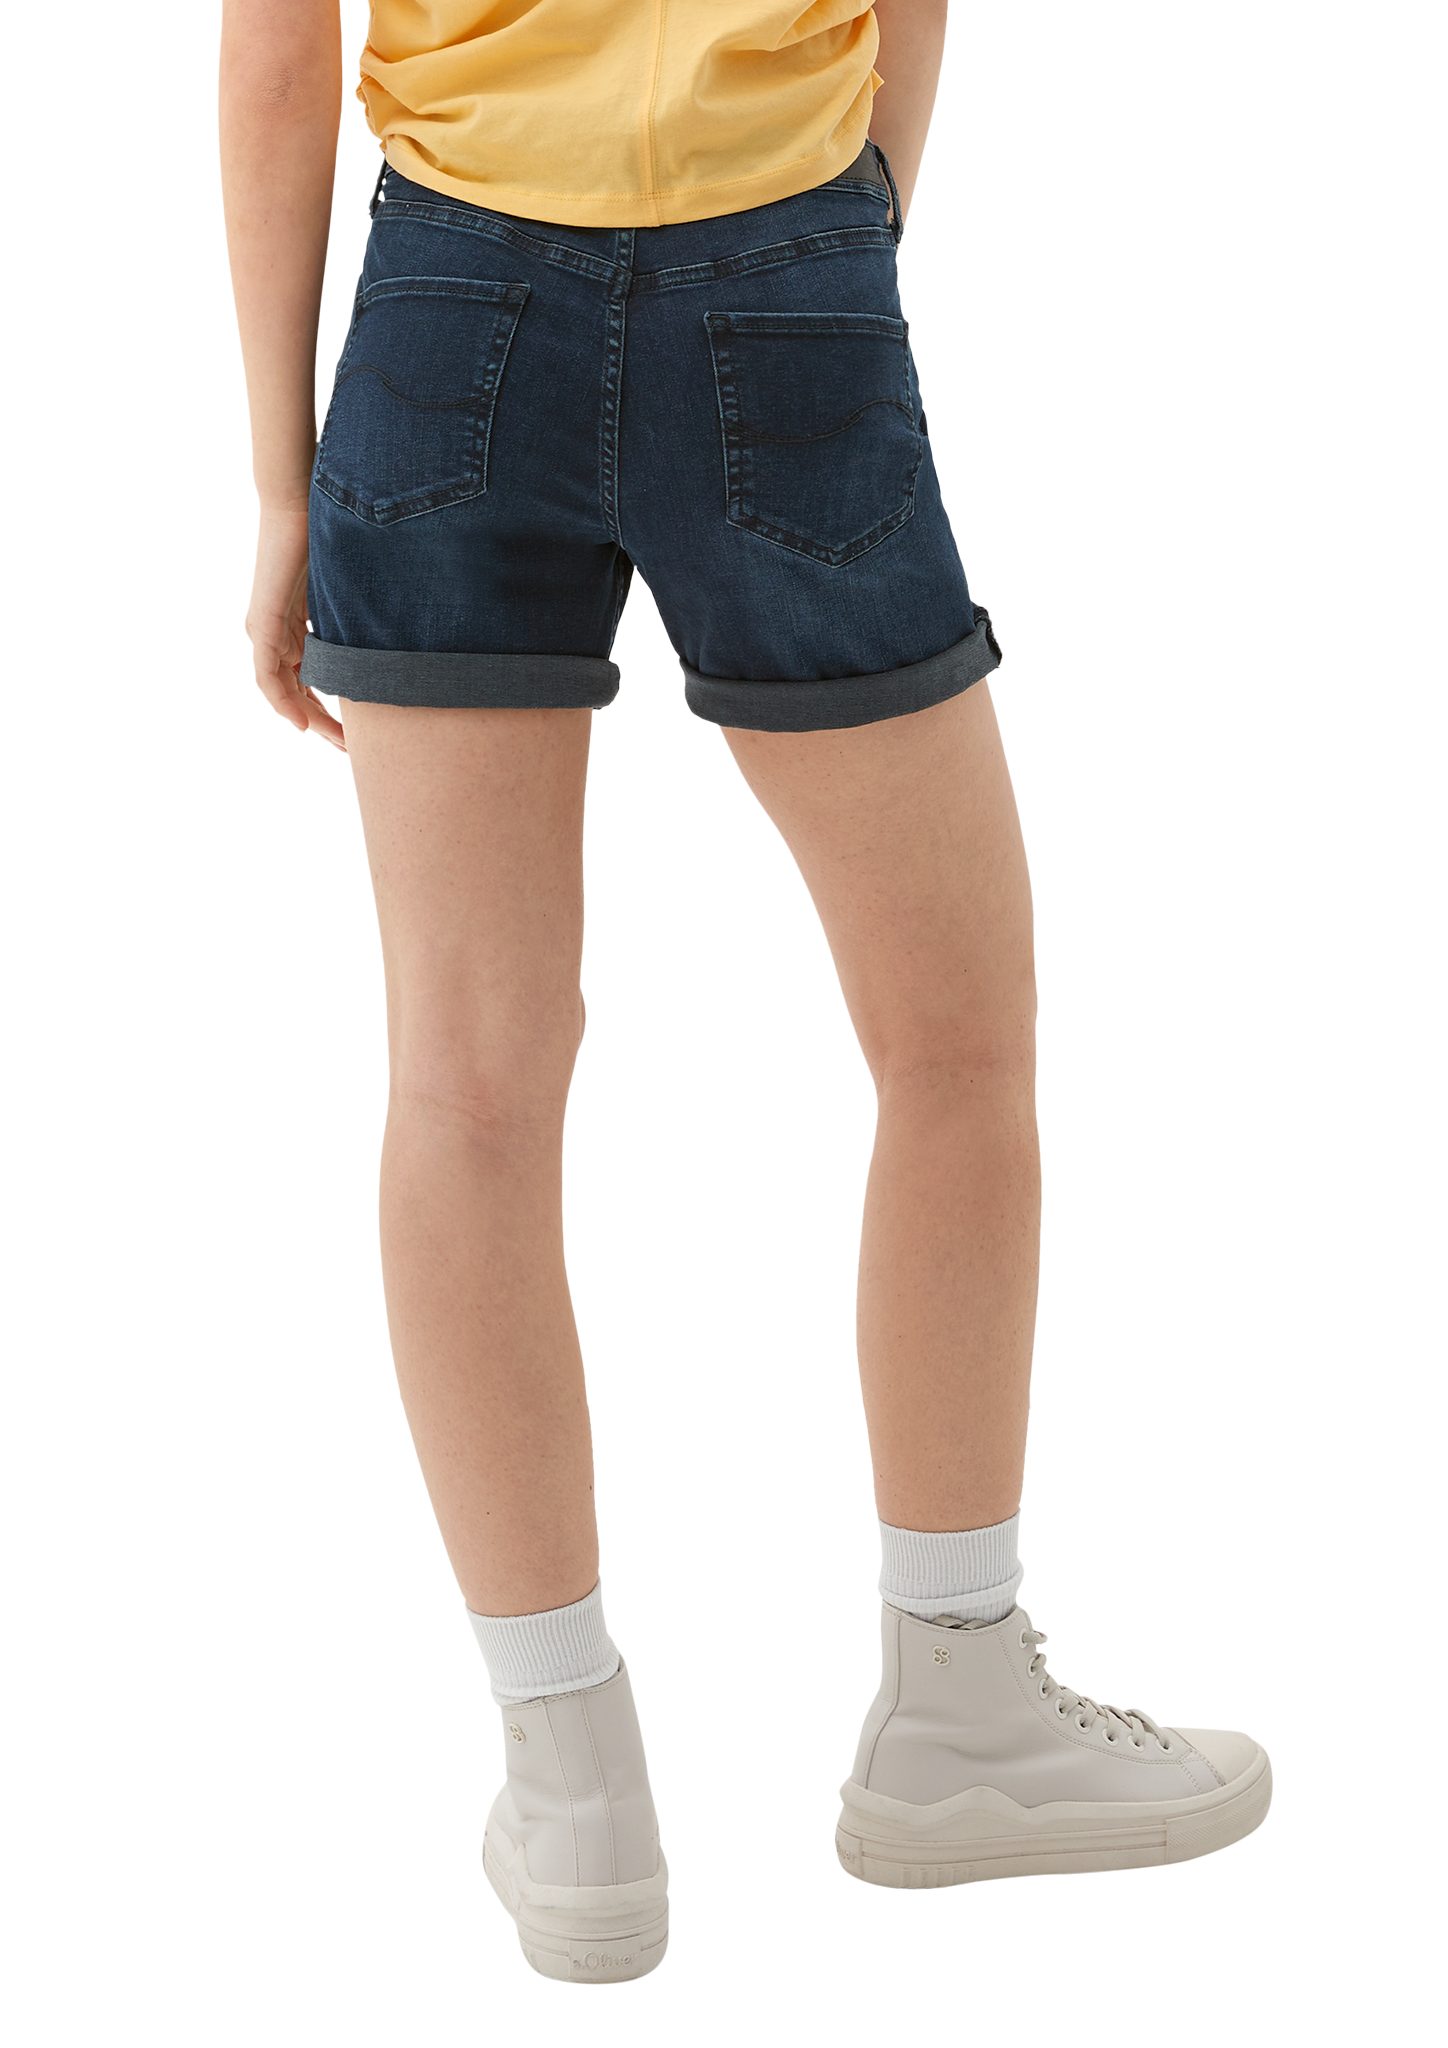 / Fit QS / Abby tiefblau Waschung / Jeans-Shorts Leg Mid Slim Slim Jeansshorts Rise